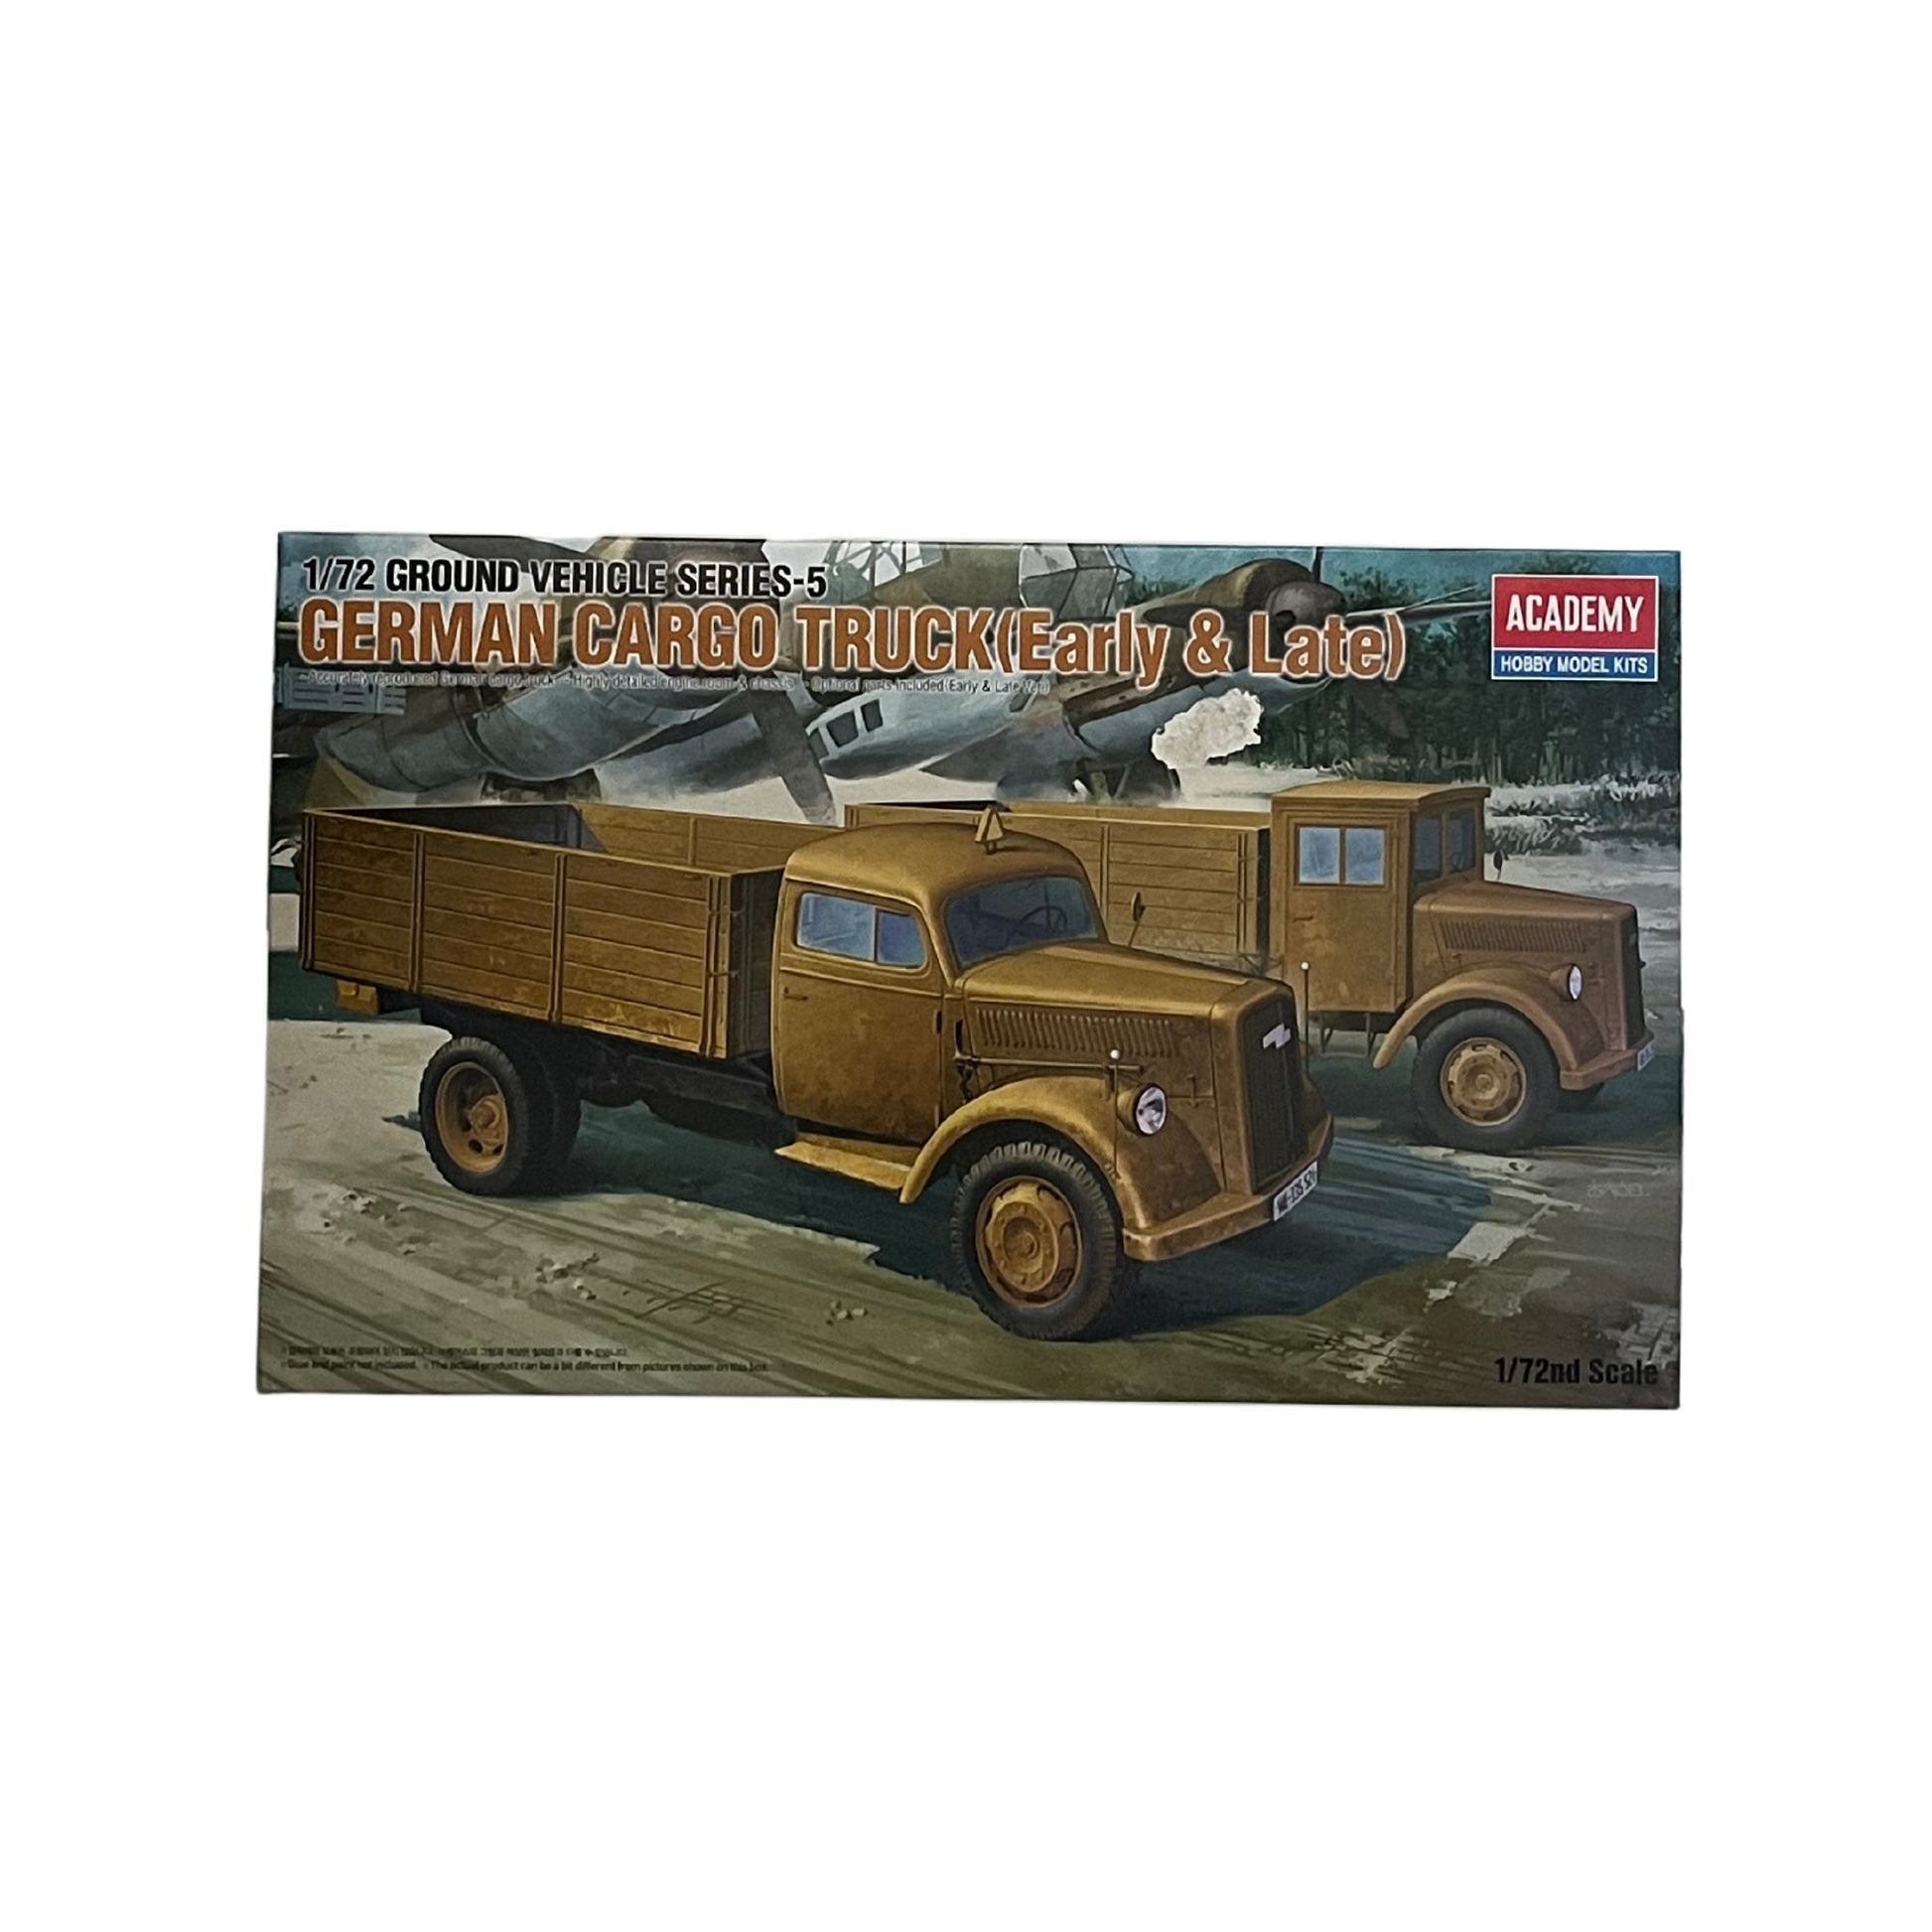 Academy model kit German Cargo Truck (early & late) 1:72